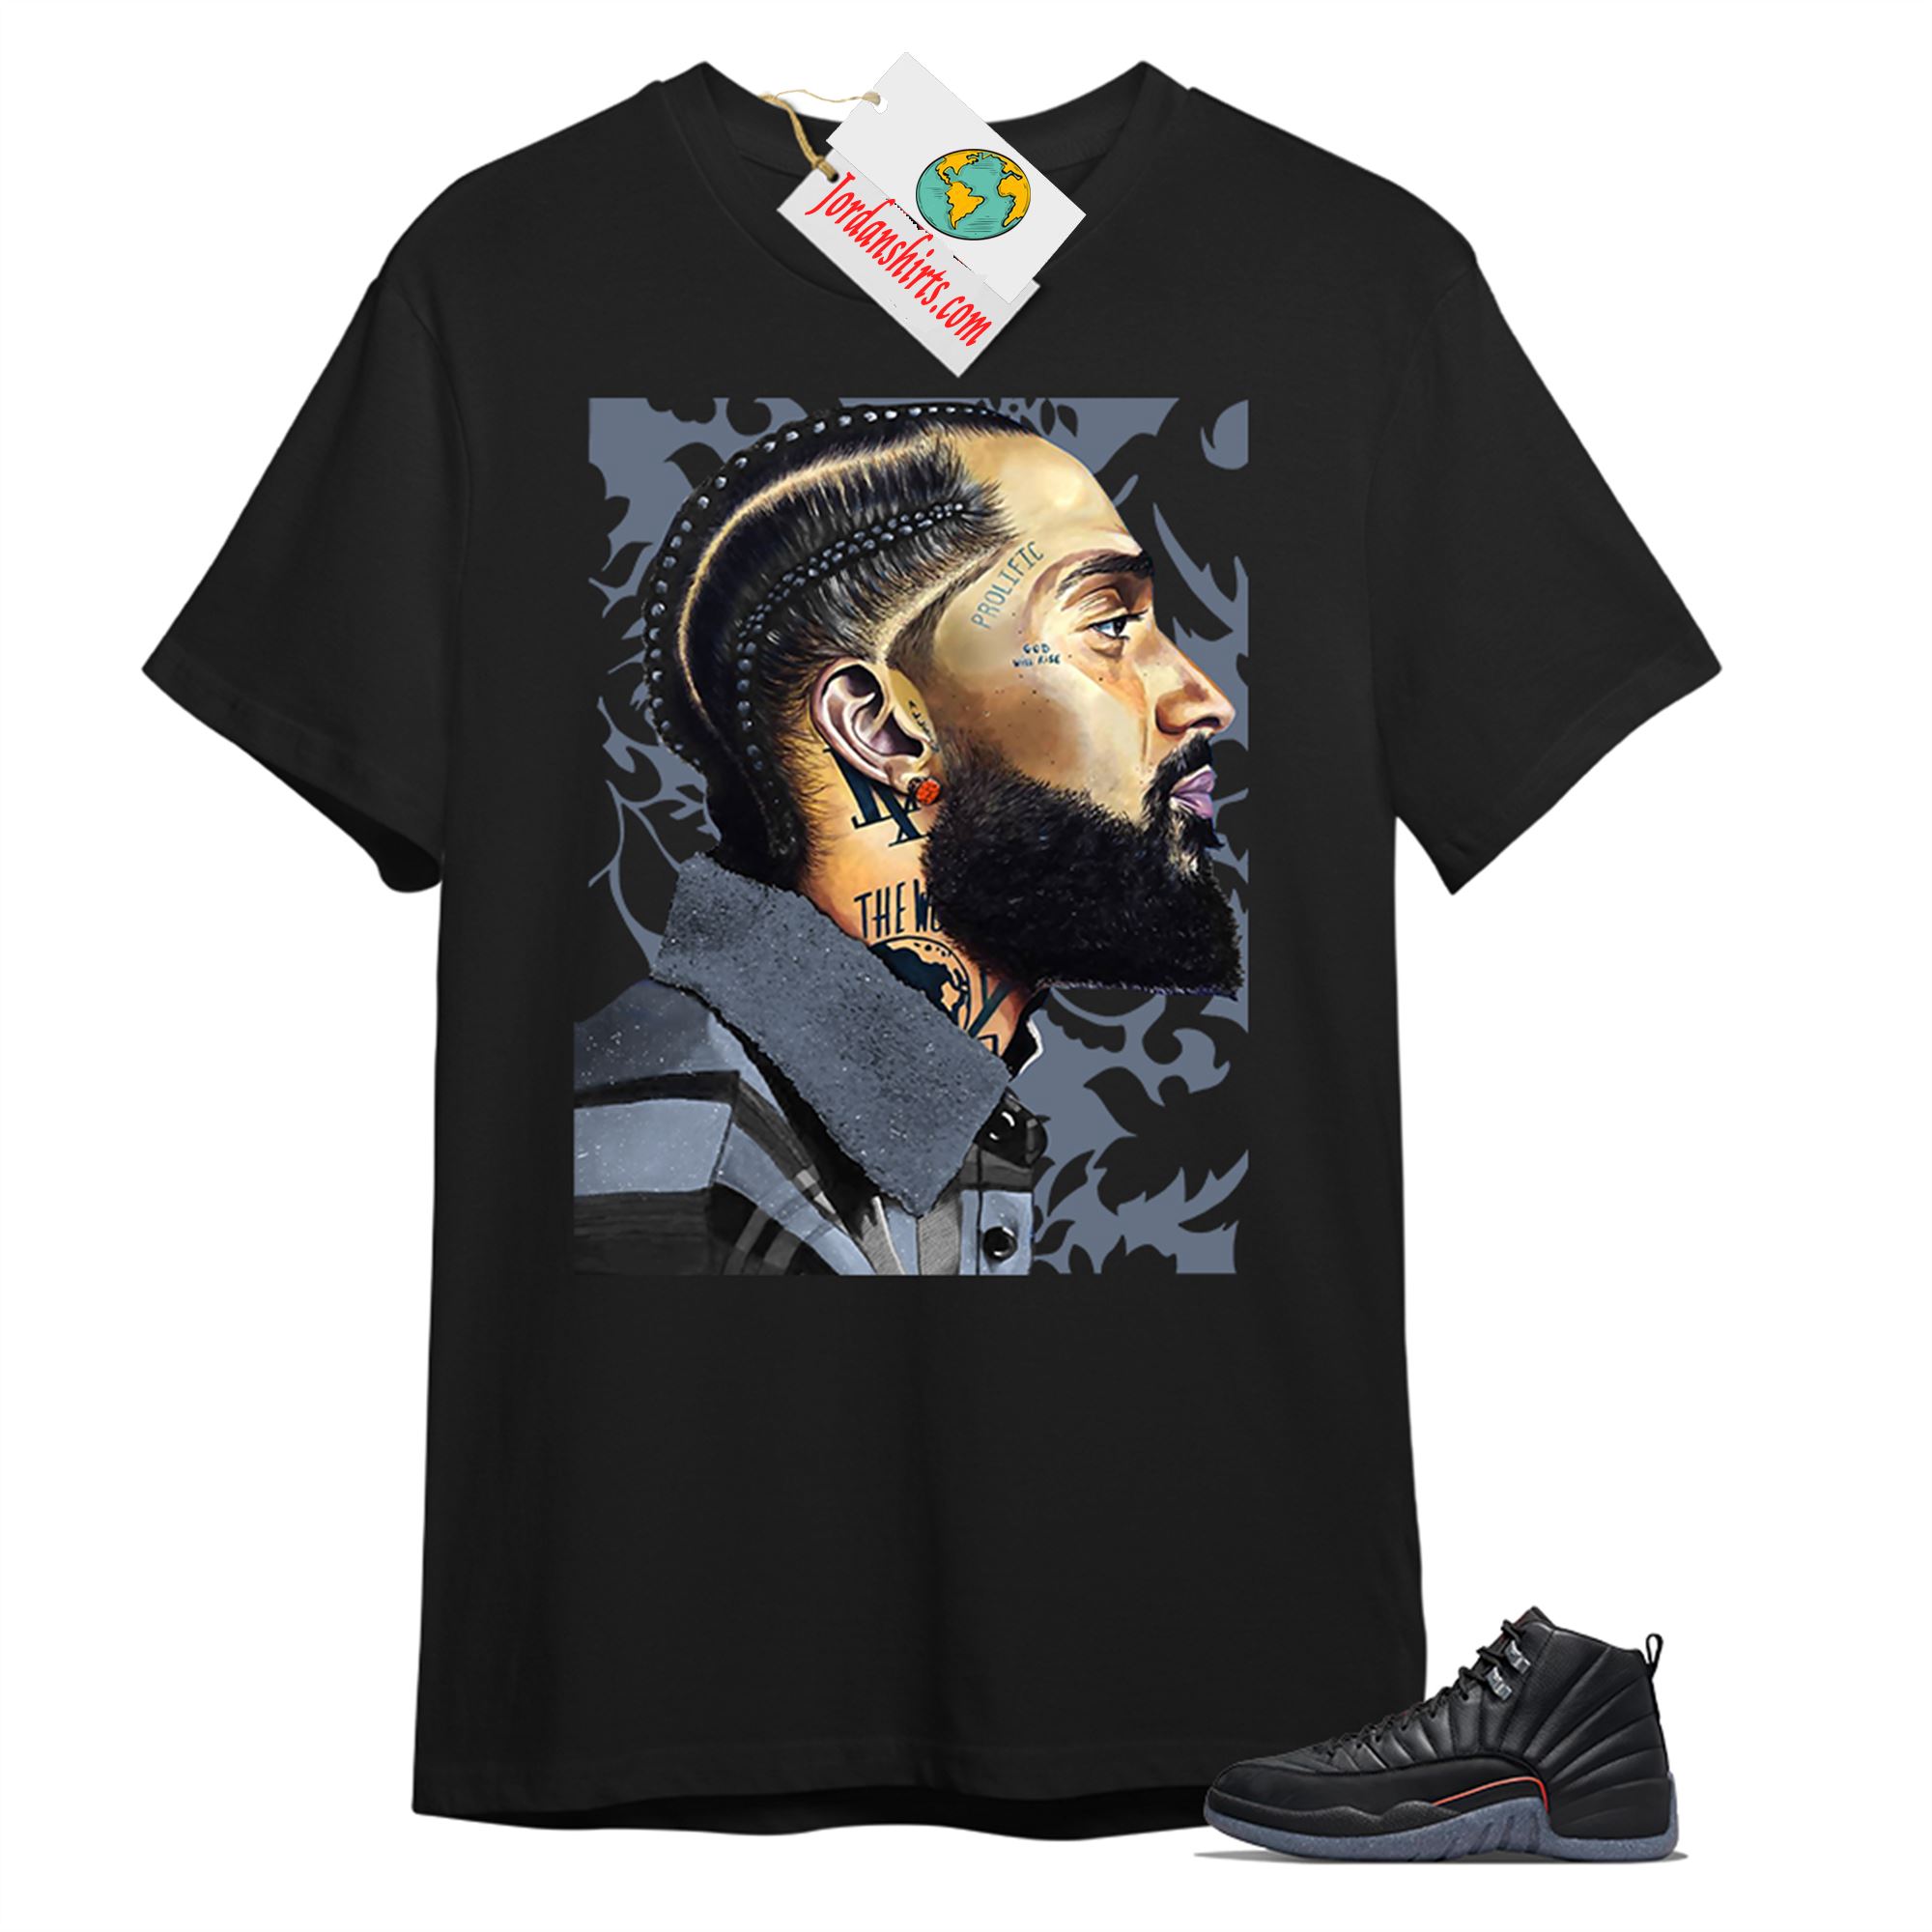 Jordan 12 Shirt, Nipsey Hussle Black T-shirt Air Jordan 12 Utility Grind 12s Full Size Up To 5xl